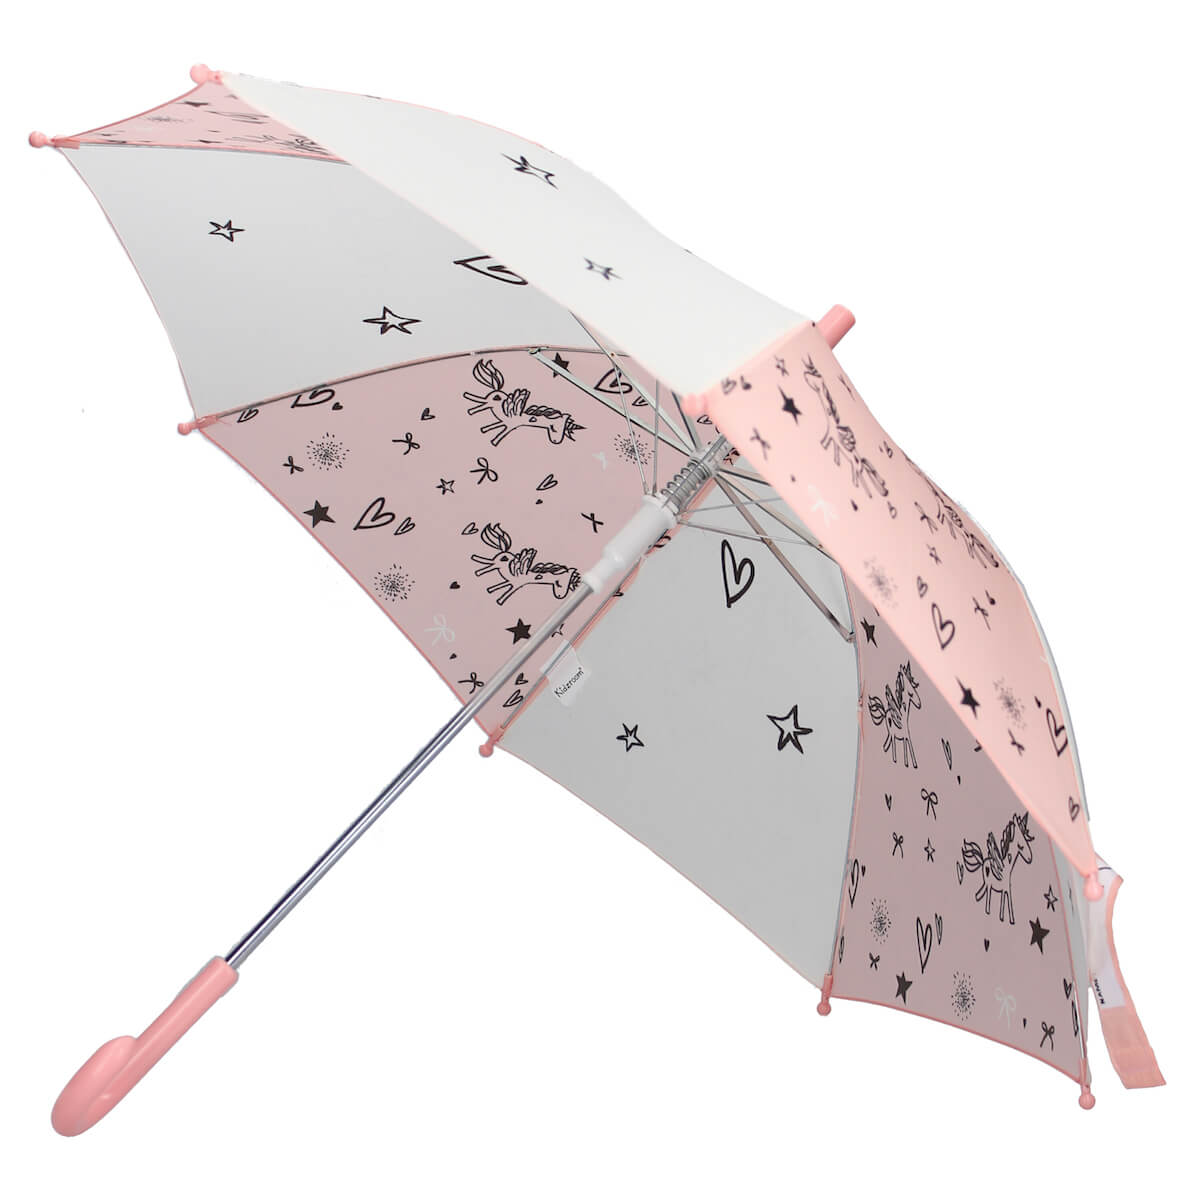 Paraguas Unicornio (rosa y blanco) Kidzroom